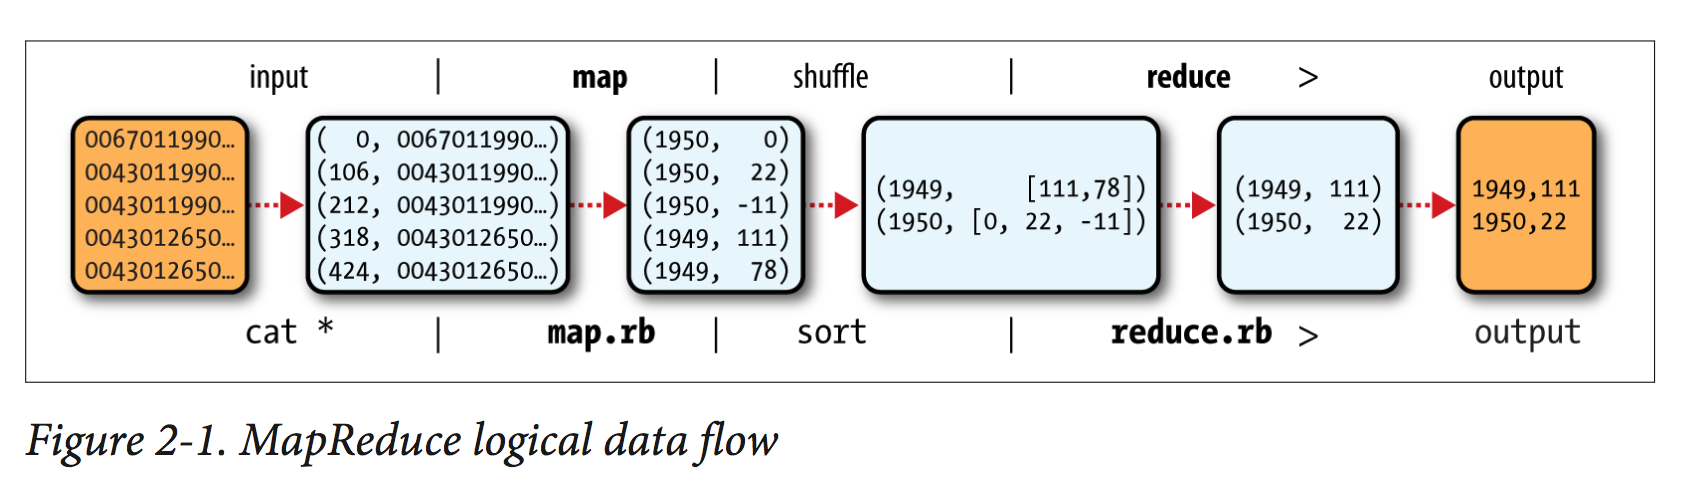 MapReduce Logical Data Flow